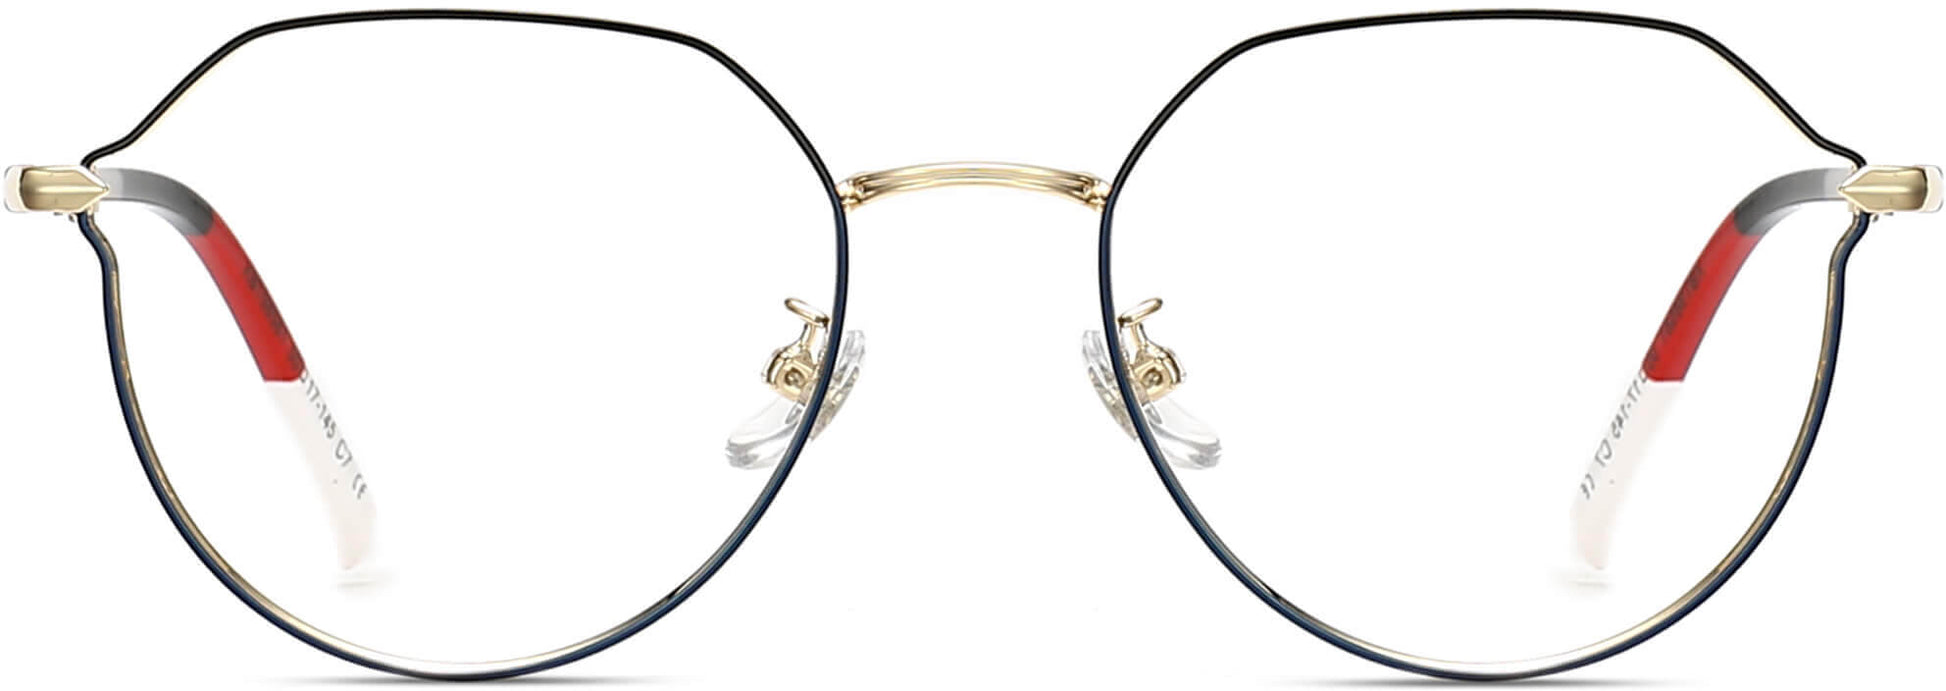 Daniella Geometric Black Eyeglasses from ANRRI, front view